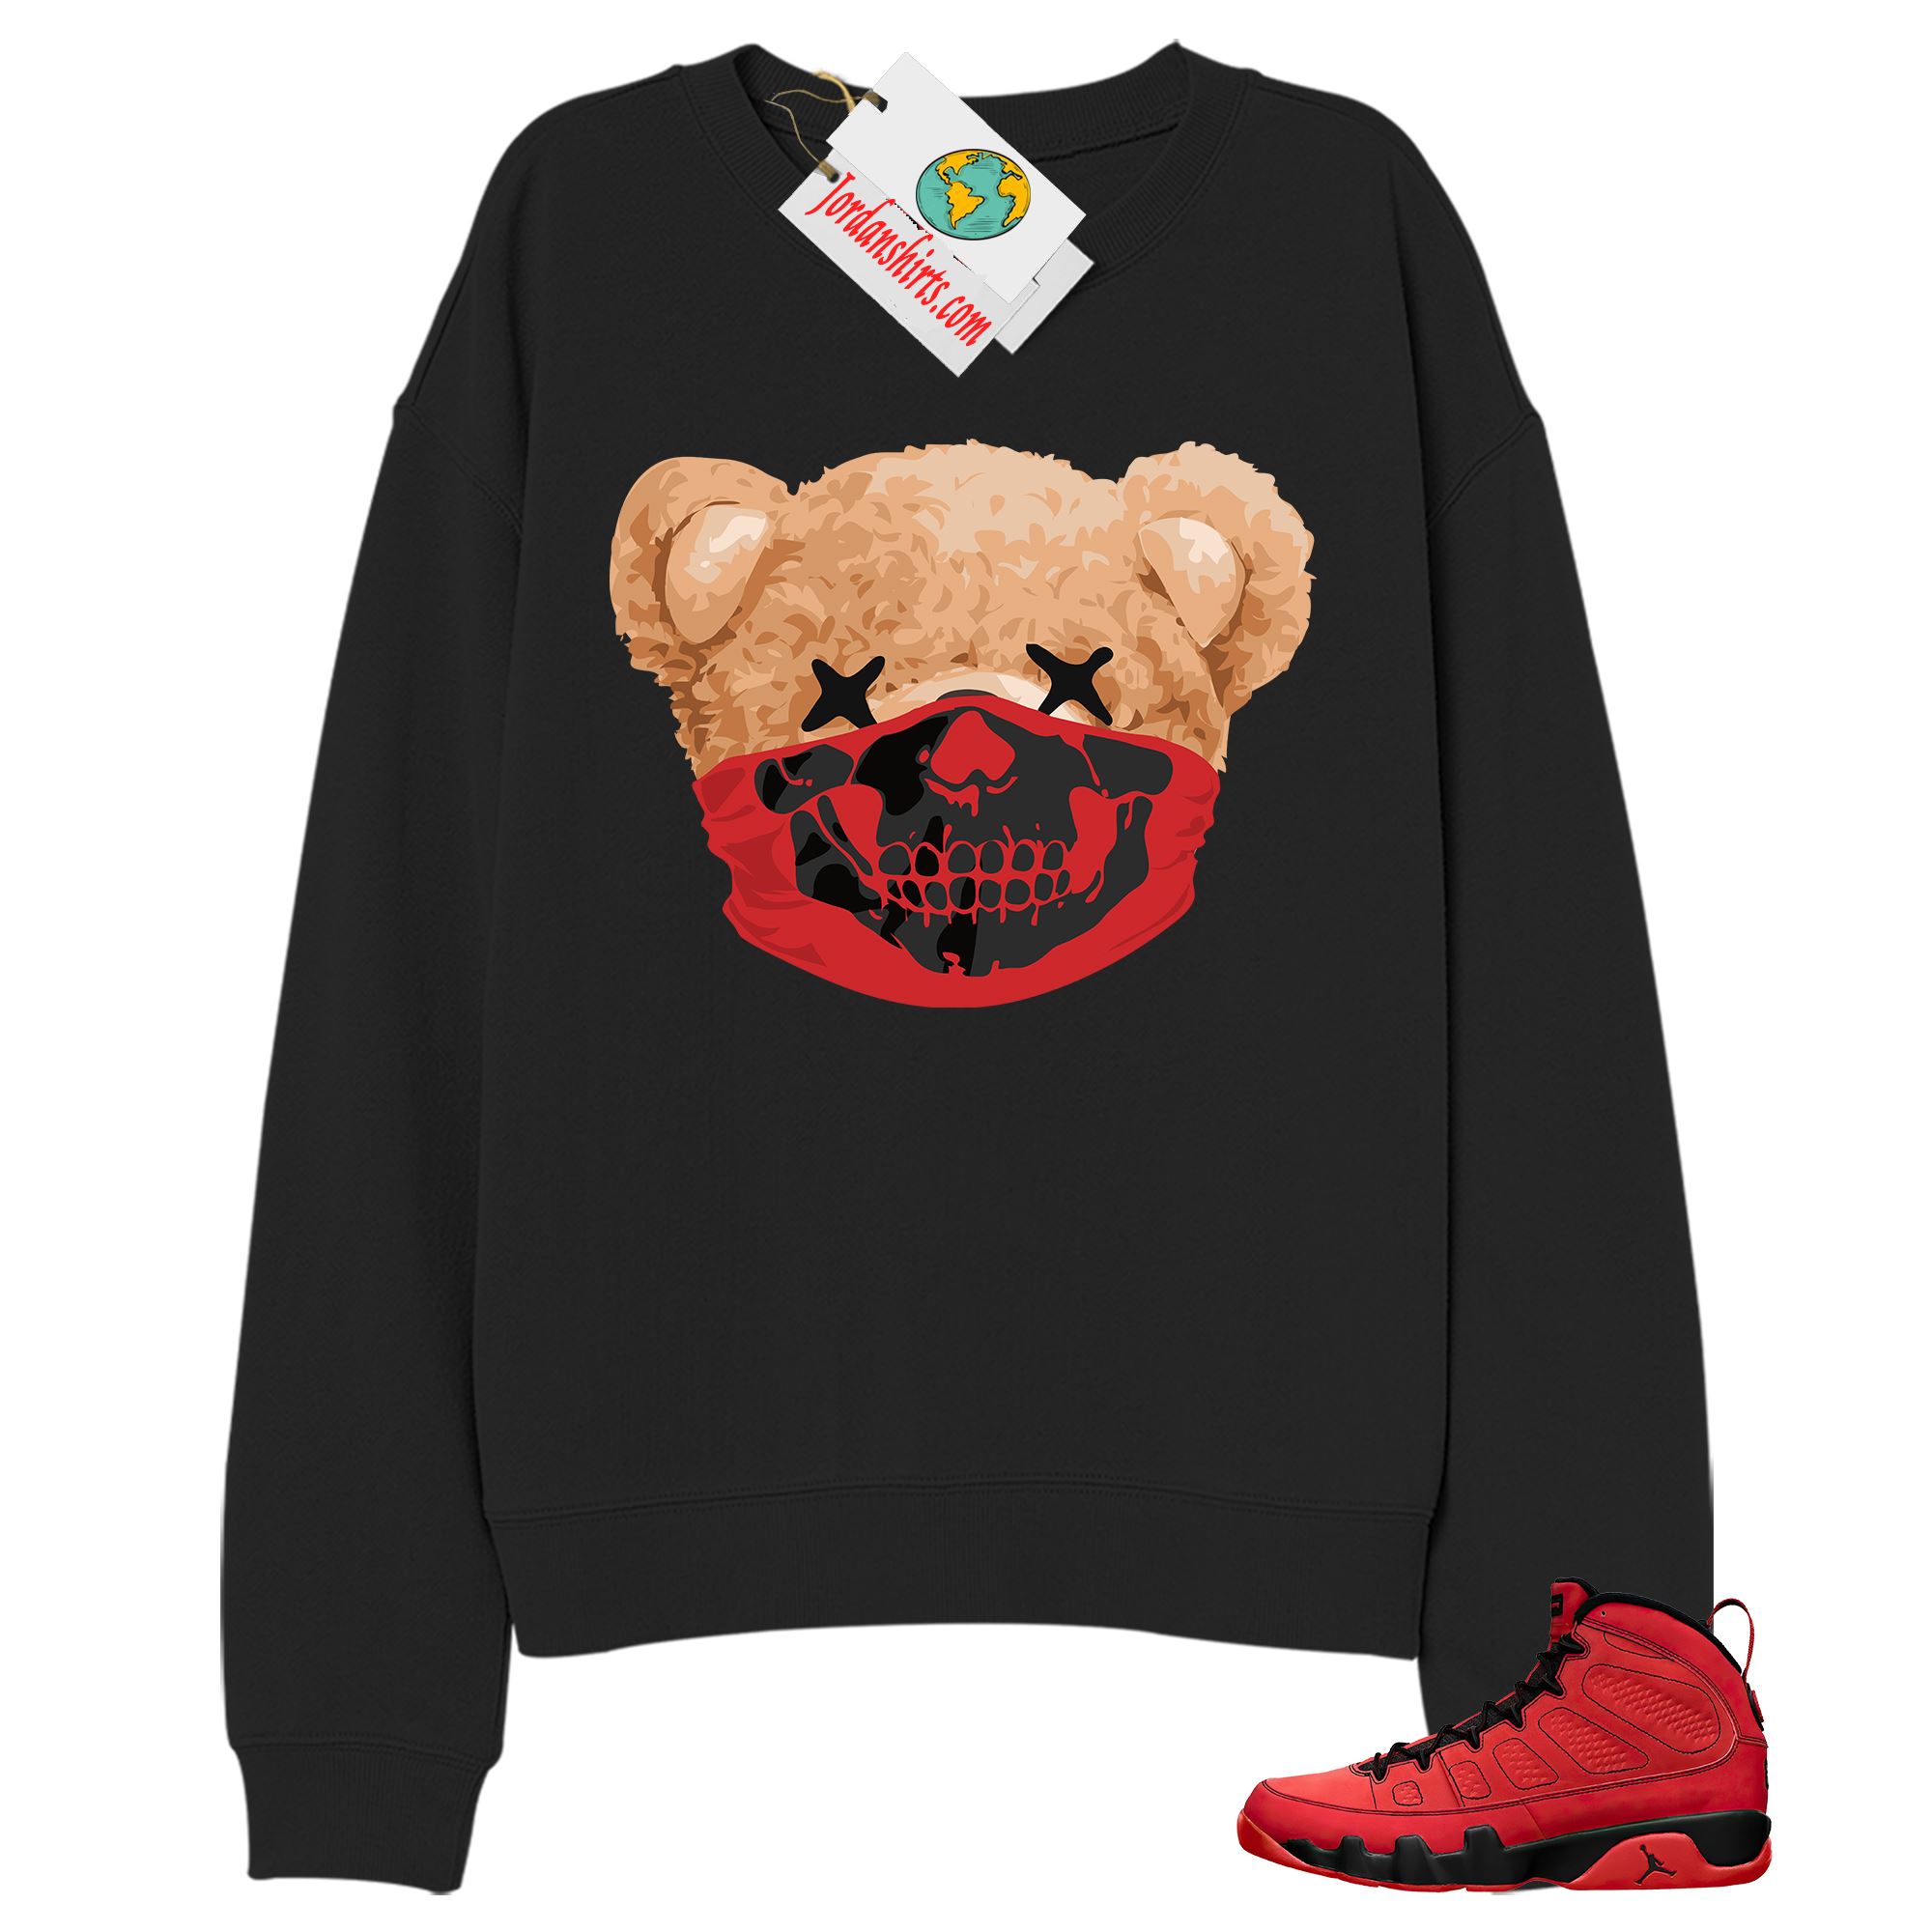 Jordan 9 Sweatshirt, Teddy Bear Skull Bandana Black Sweatshirt Air Jordan 9 Chile Red 9s Size Up To 5xl